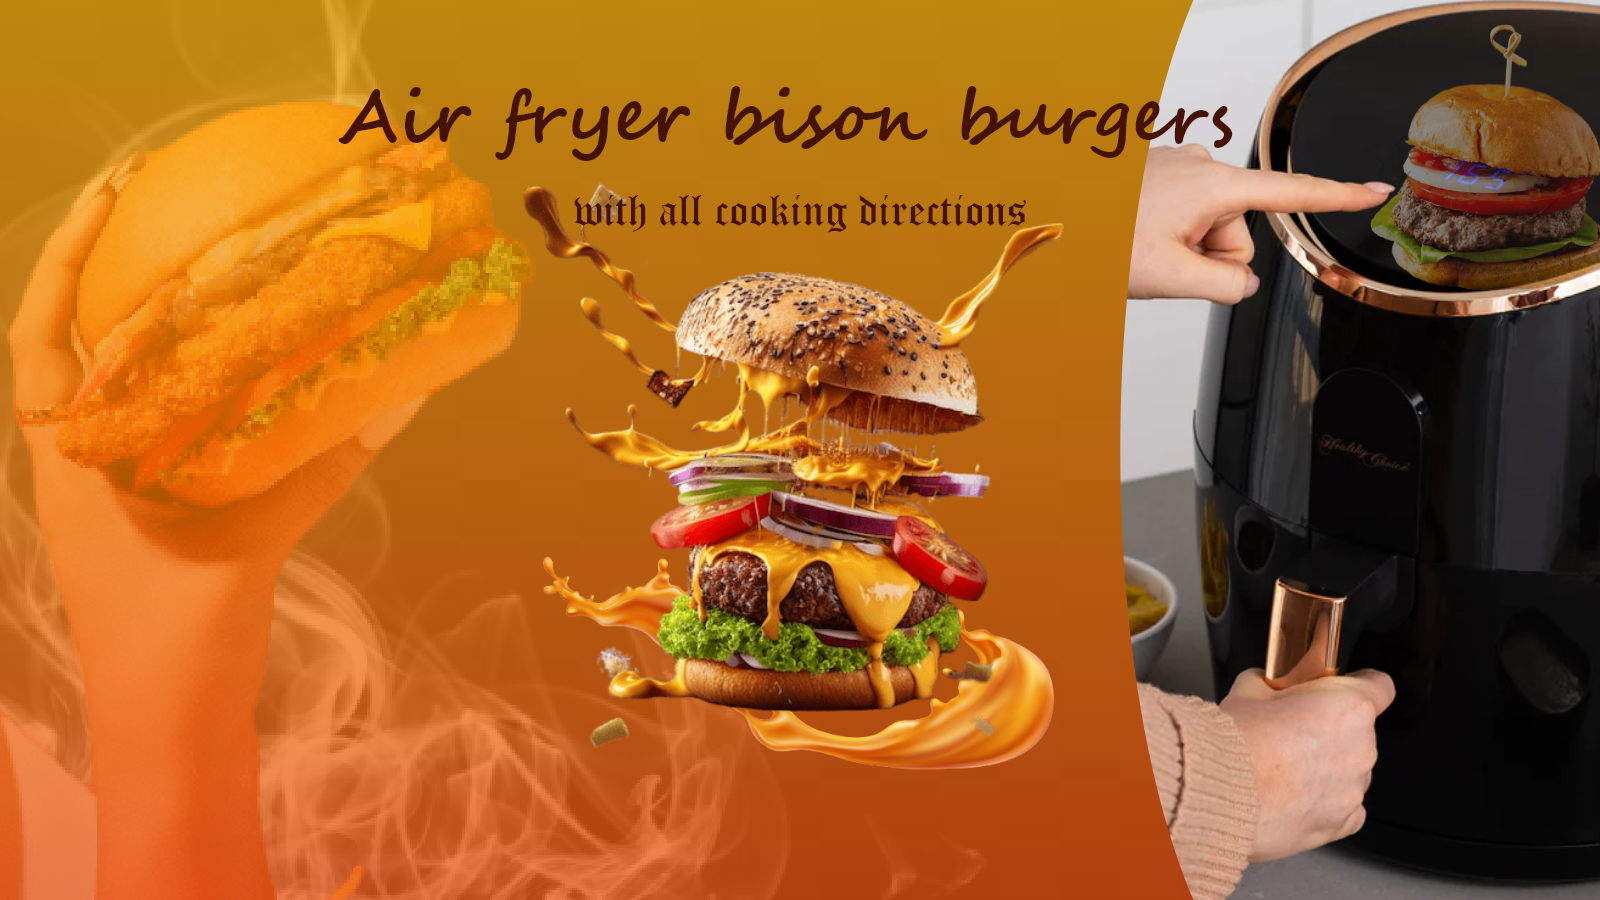 Bison Burger air fryer